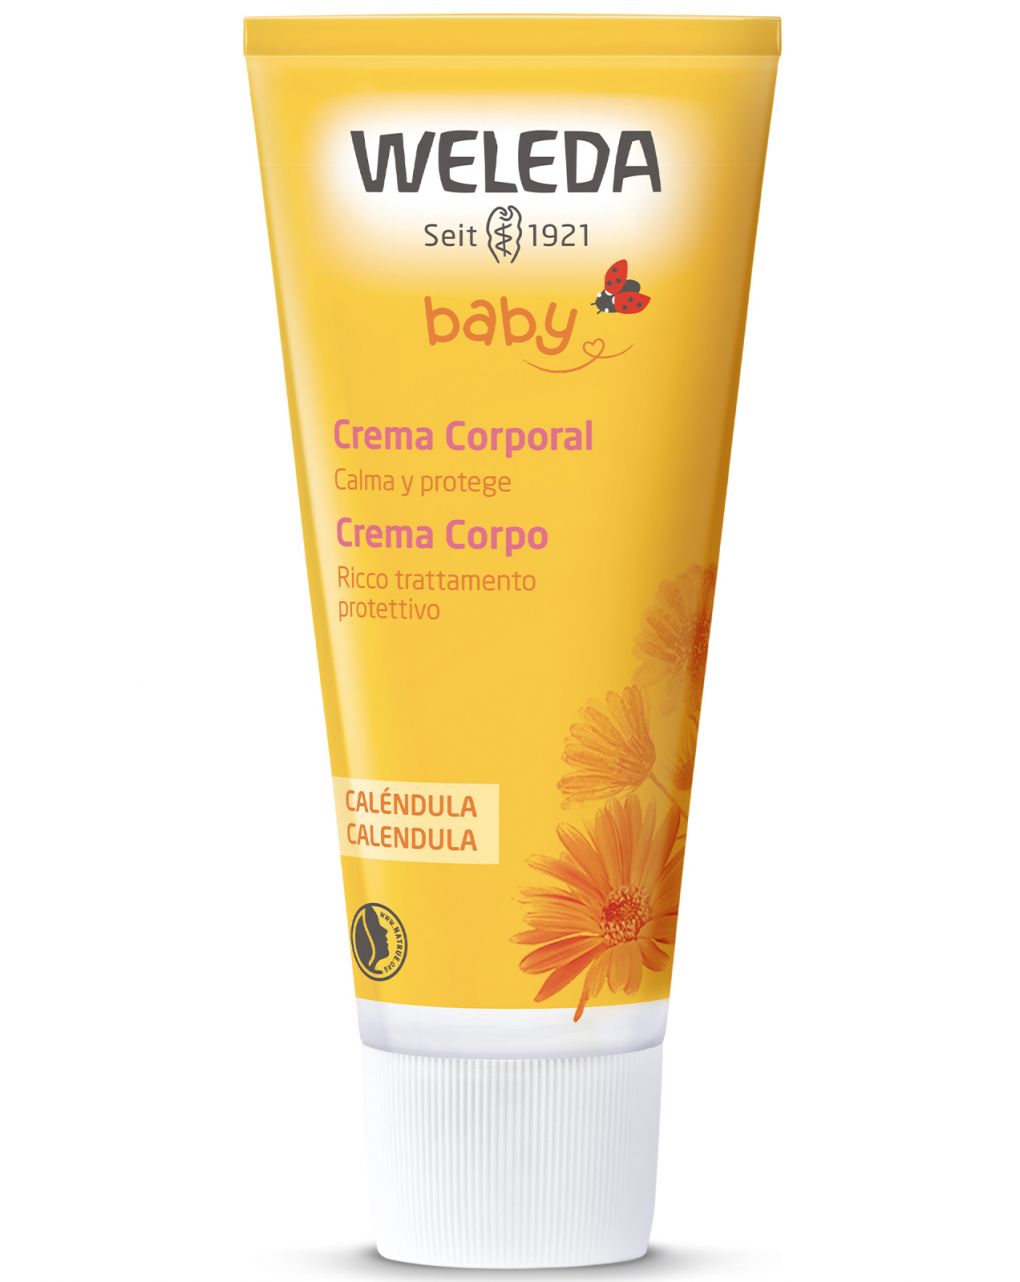 Weleda - baby crema corpo calendula - Weleda